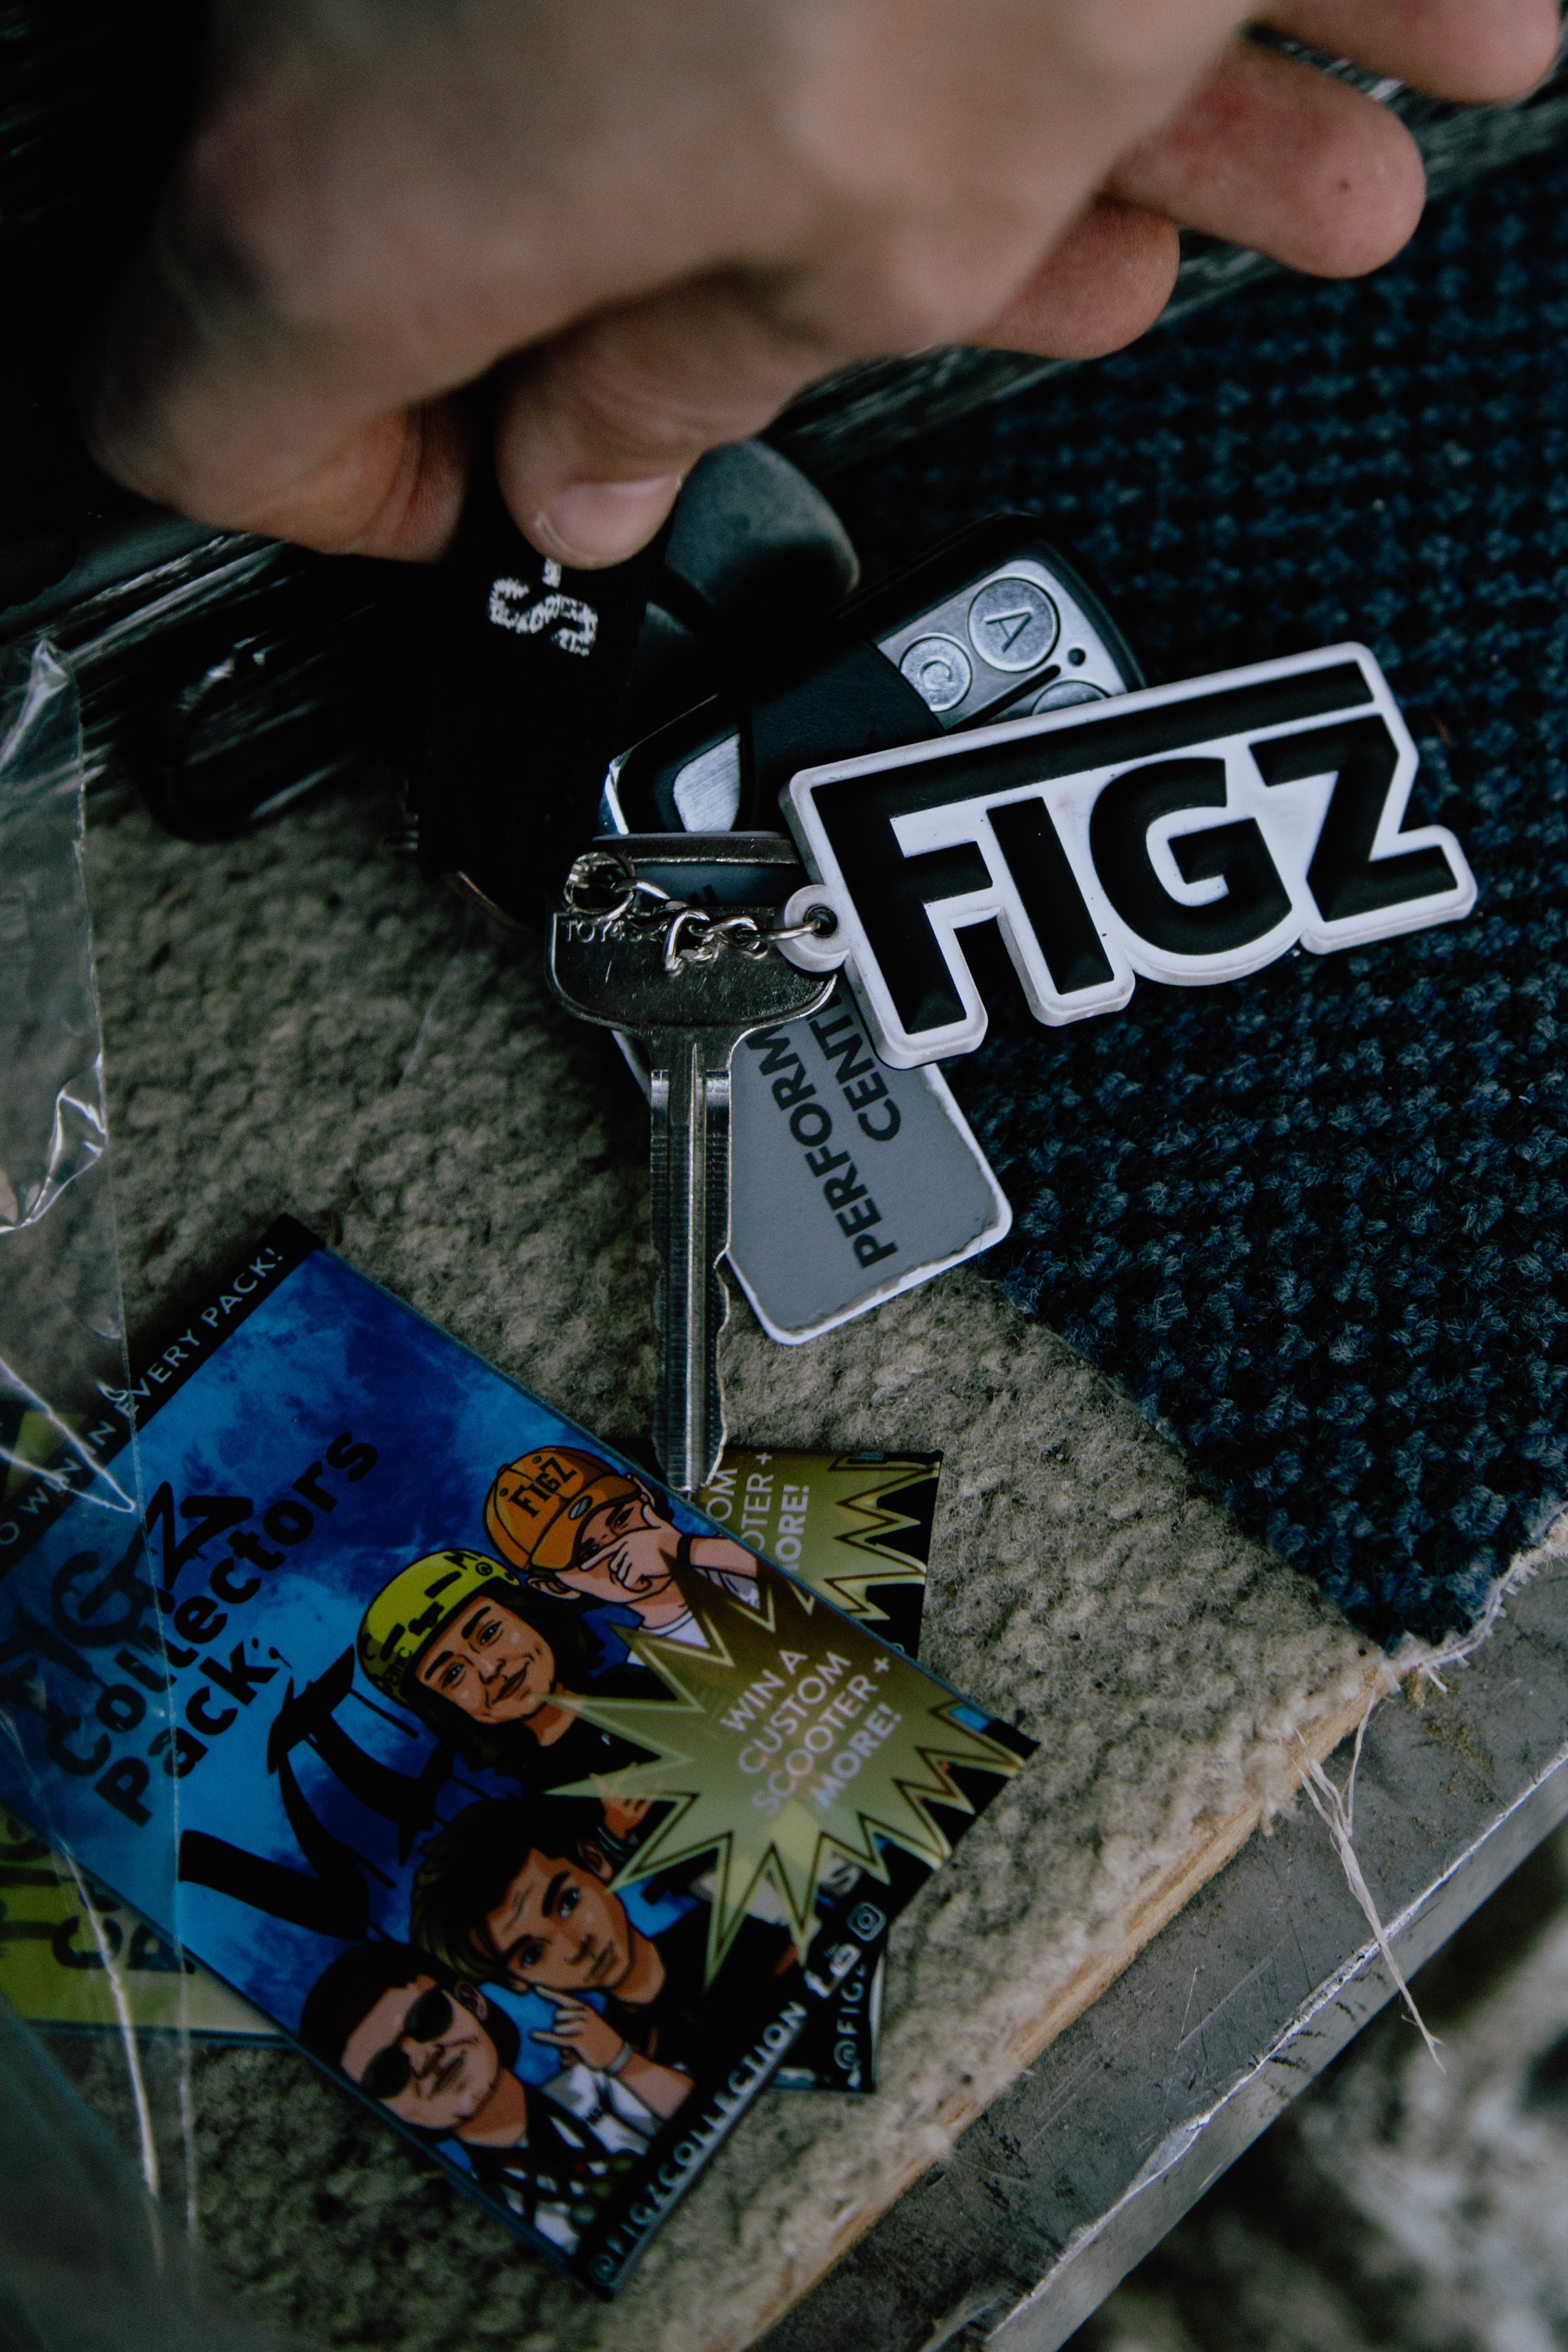 Figz Logo | 3D Keyring